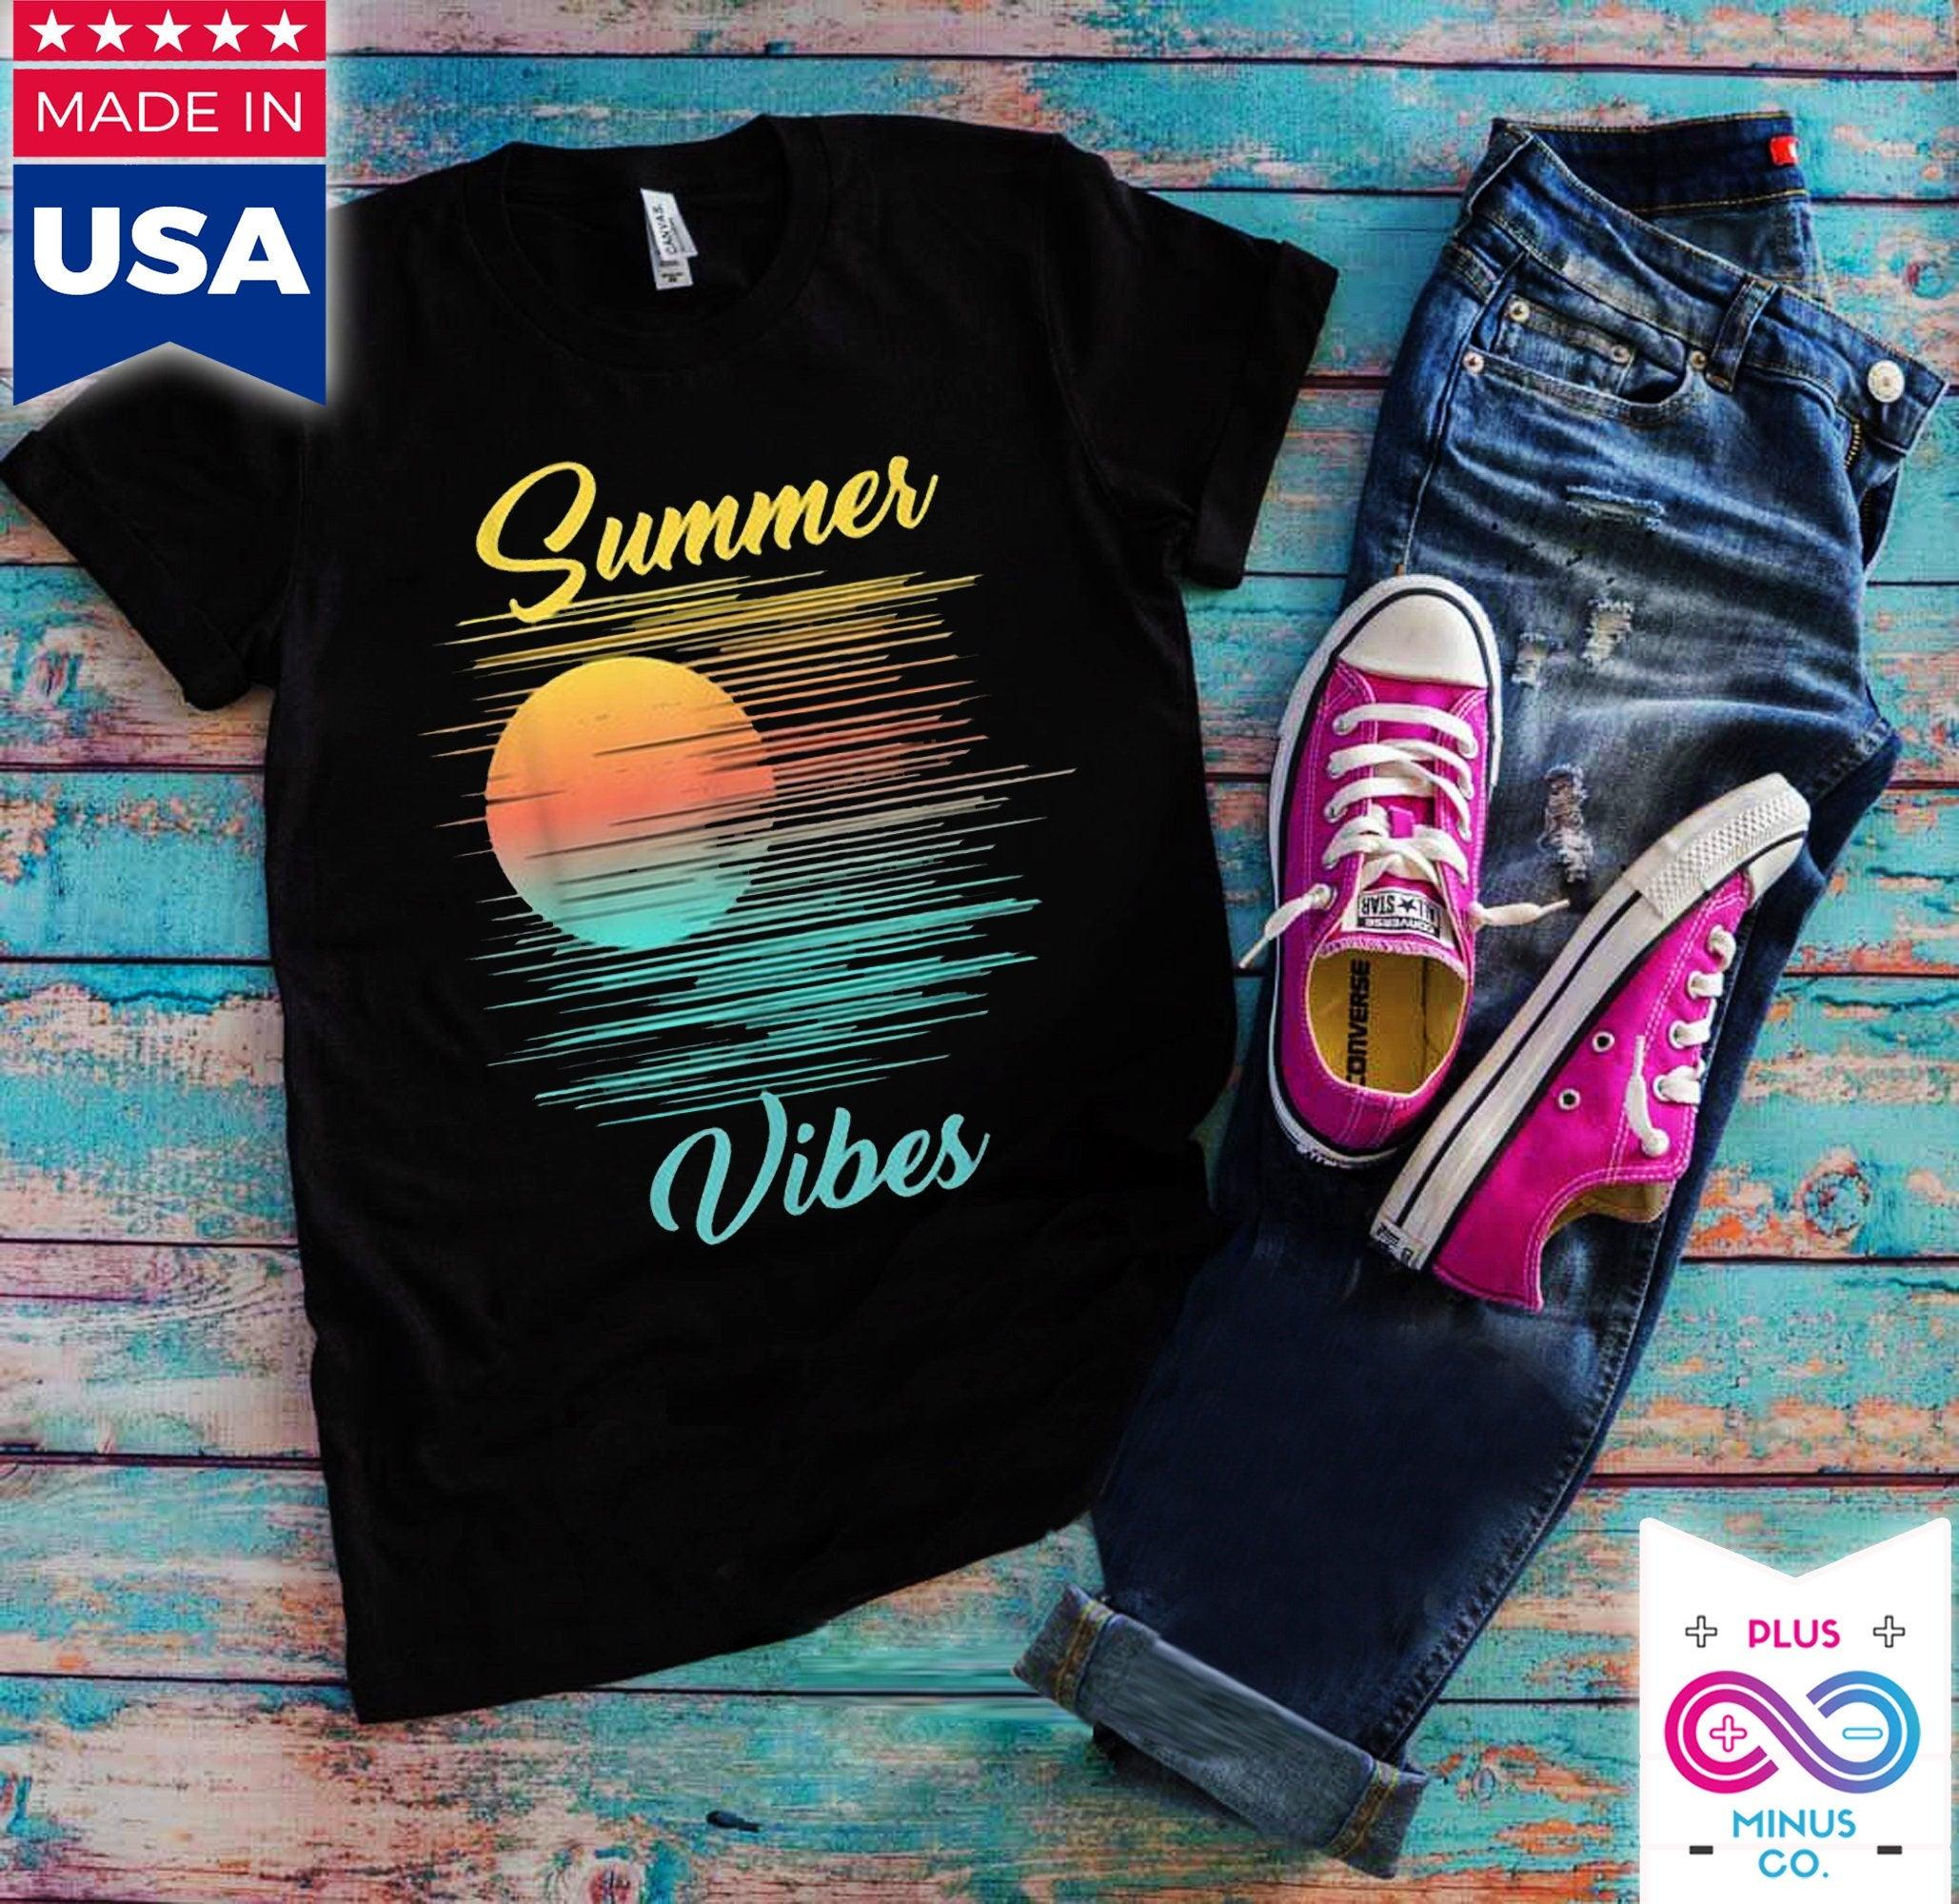 Retro Cool Vintage Summer Vibes Нові сорочки Футболка Summer Vintage Retro Vibes Shirt Sunshine Tropical Summer Vibes Vacation TShirt - plusminusco.com